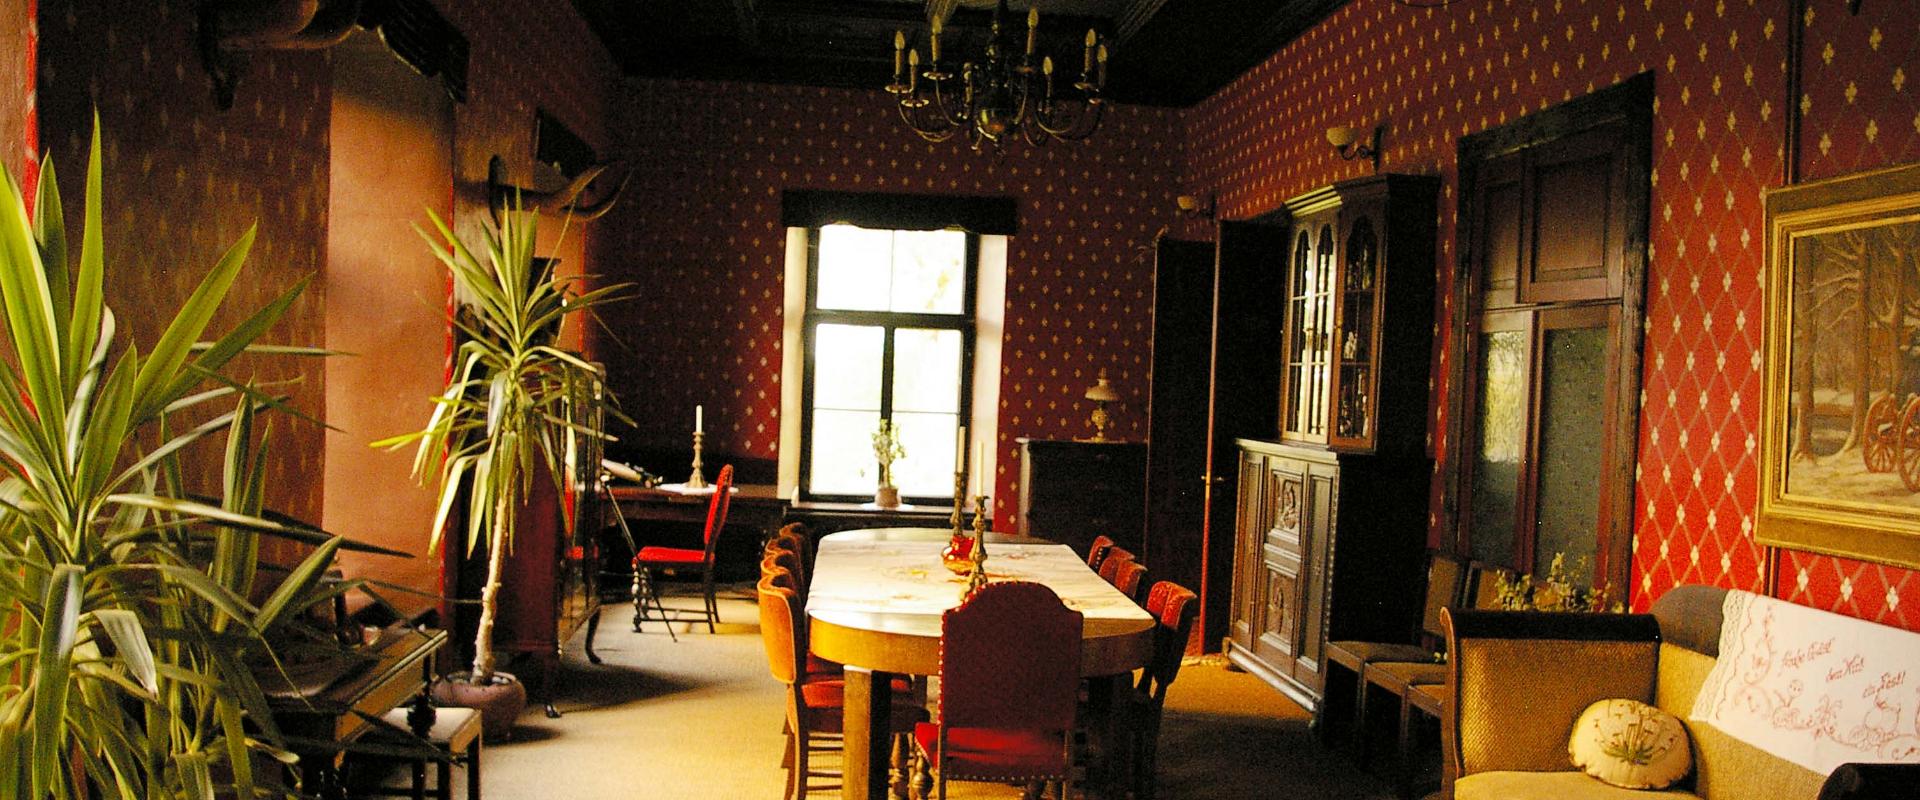 Atla Manor dining hall